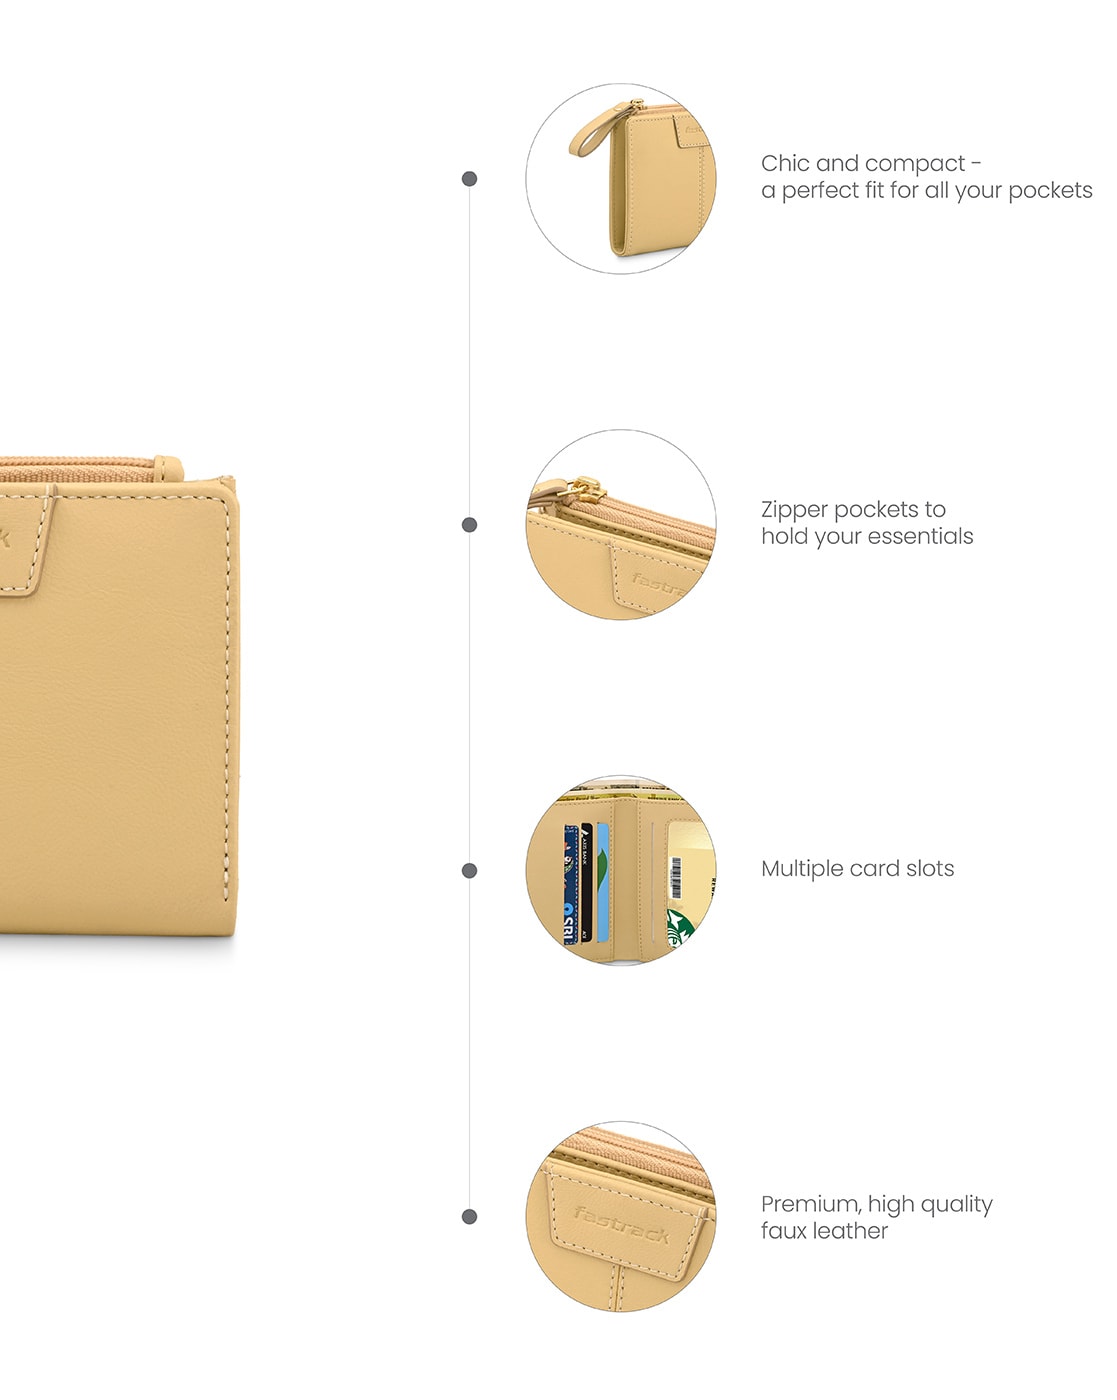 Designer Handbags | Stylish Handbag | Leather Purse | Get up to 60% off